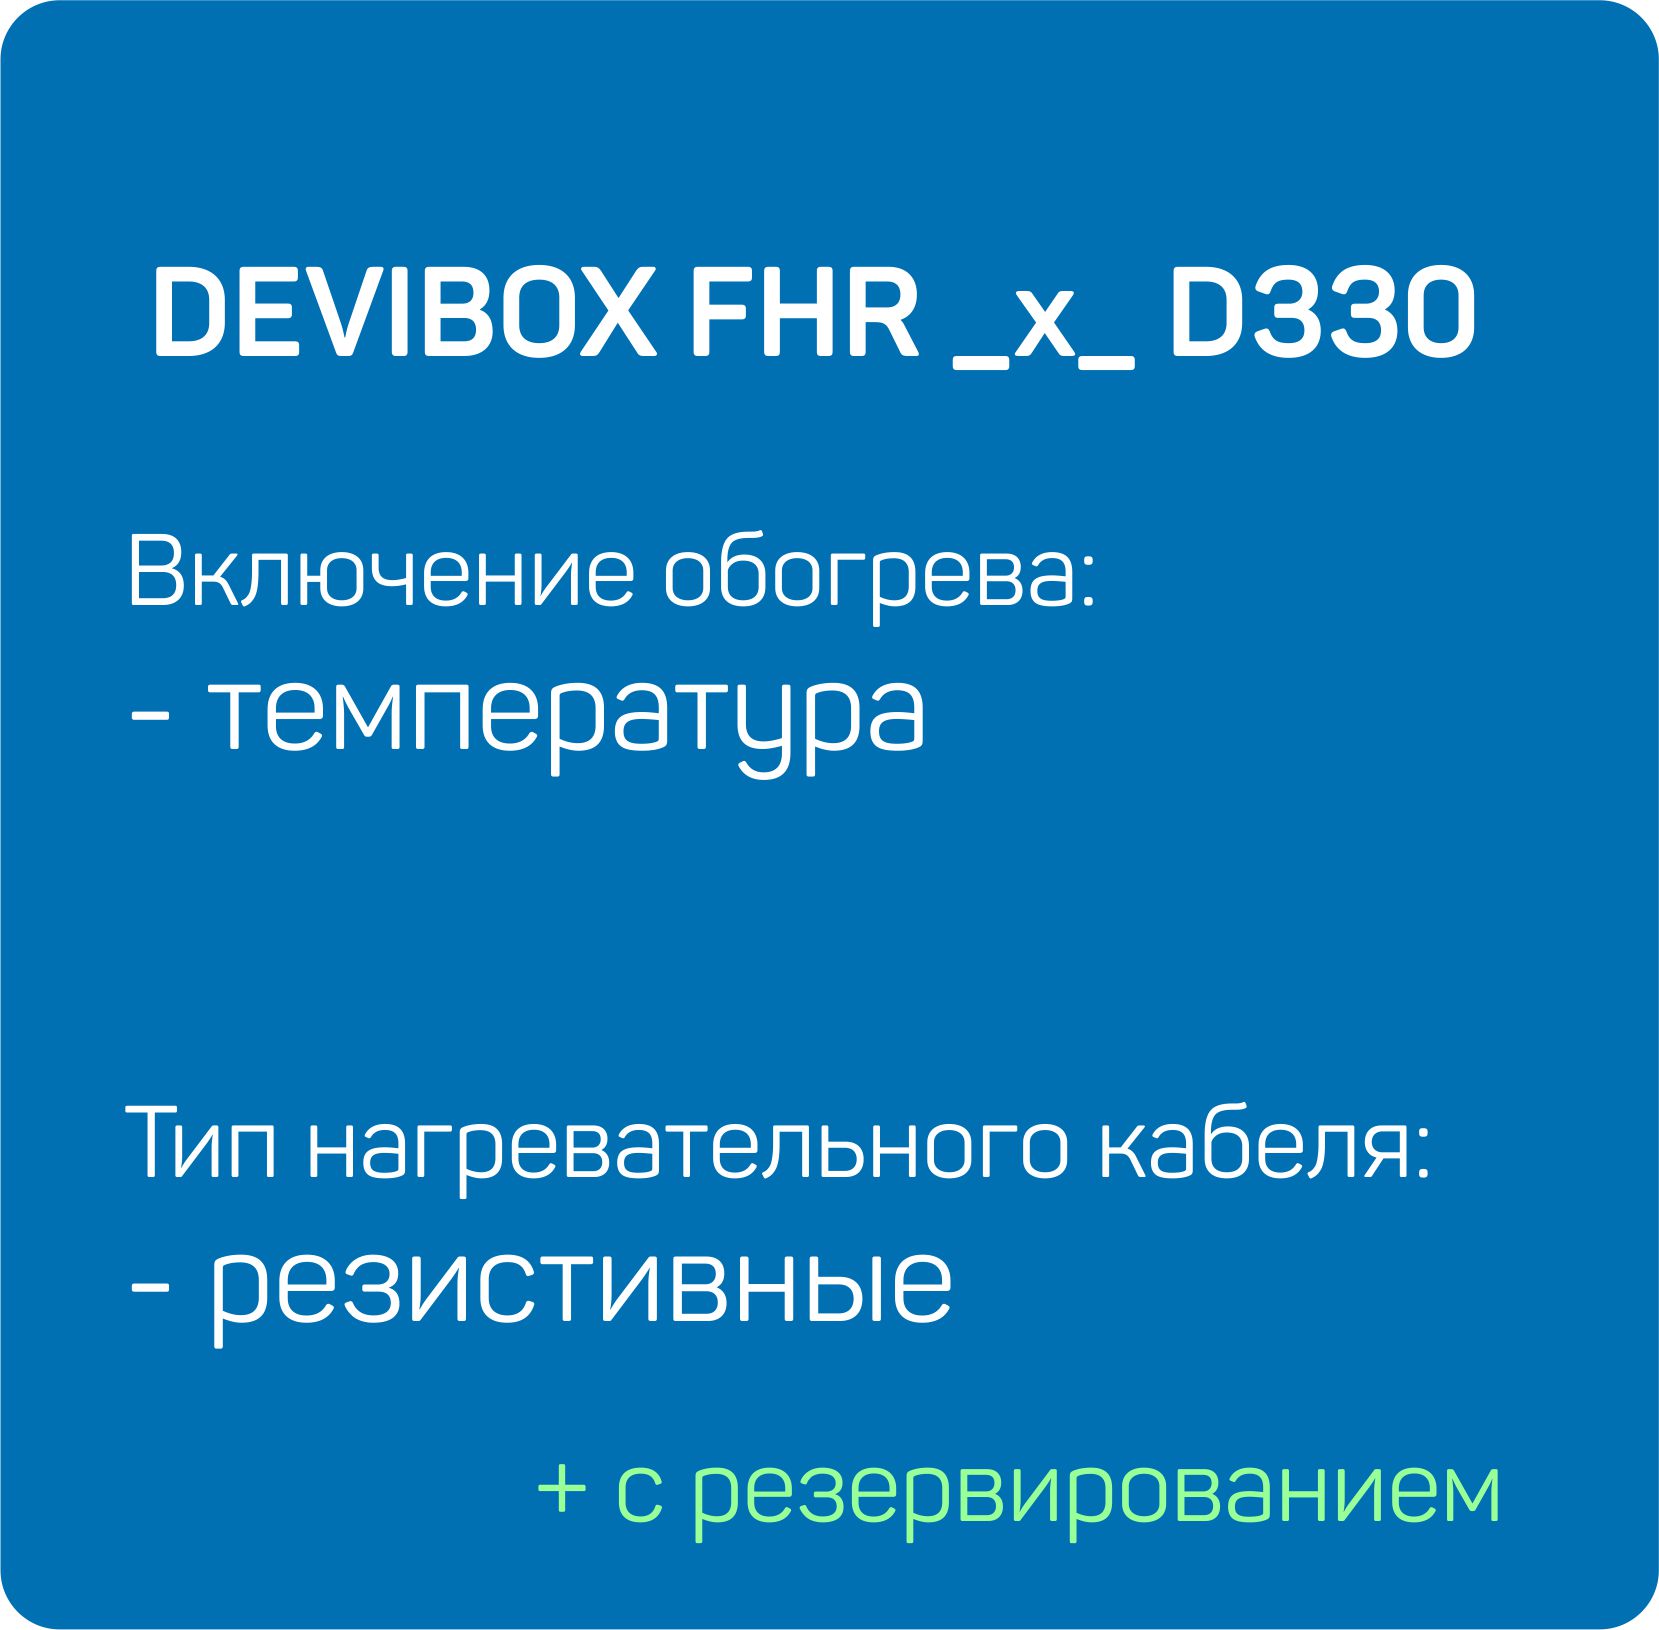 FHR _x_ D330